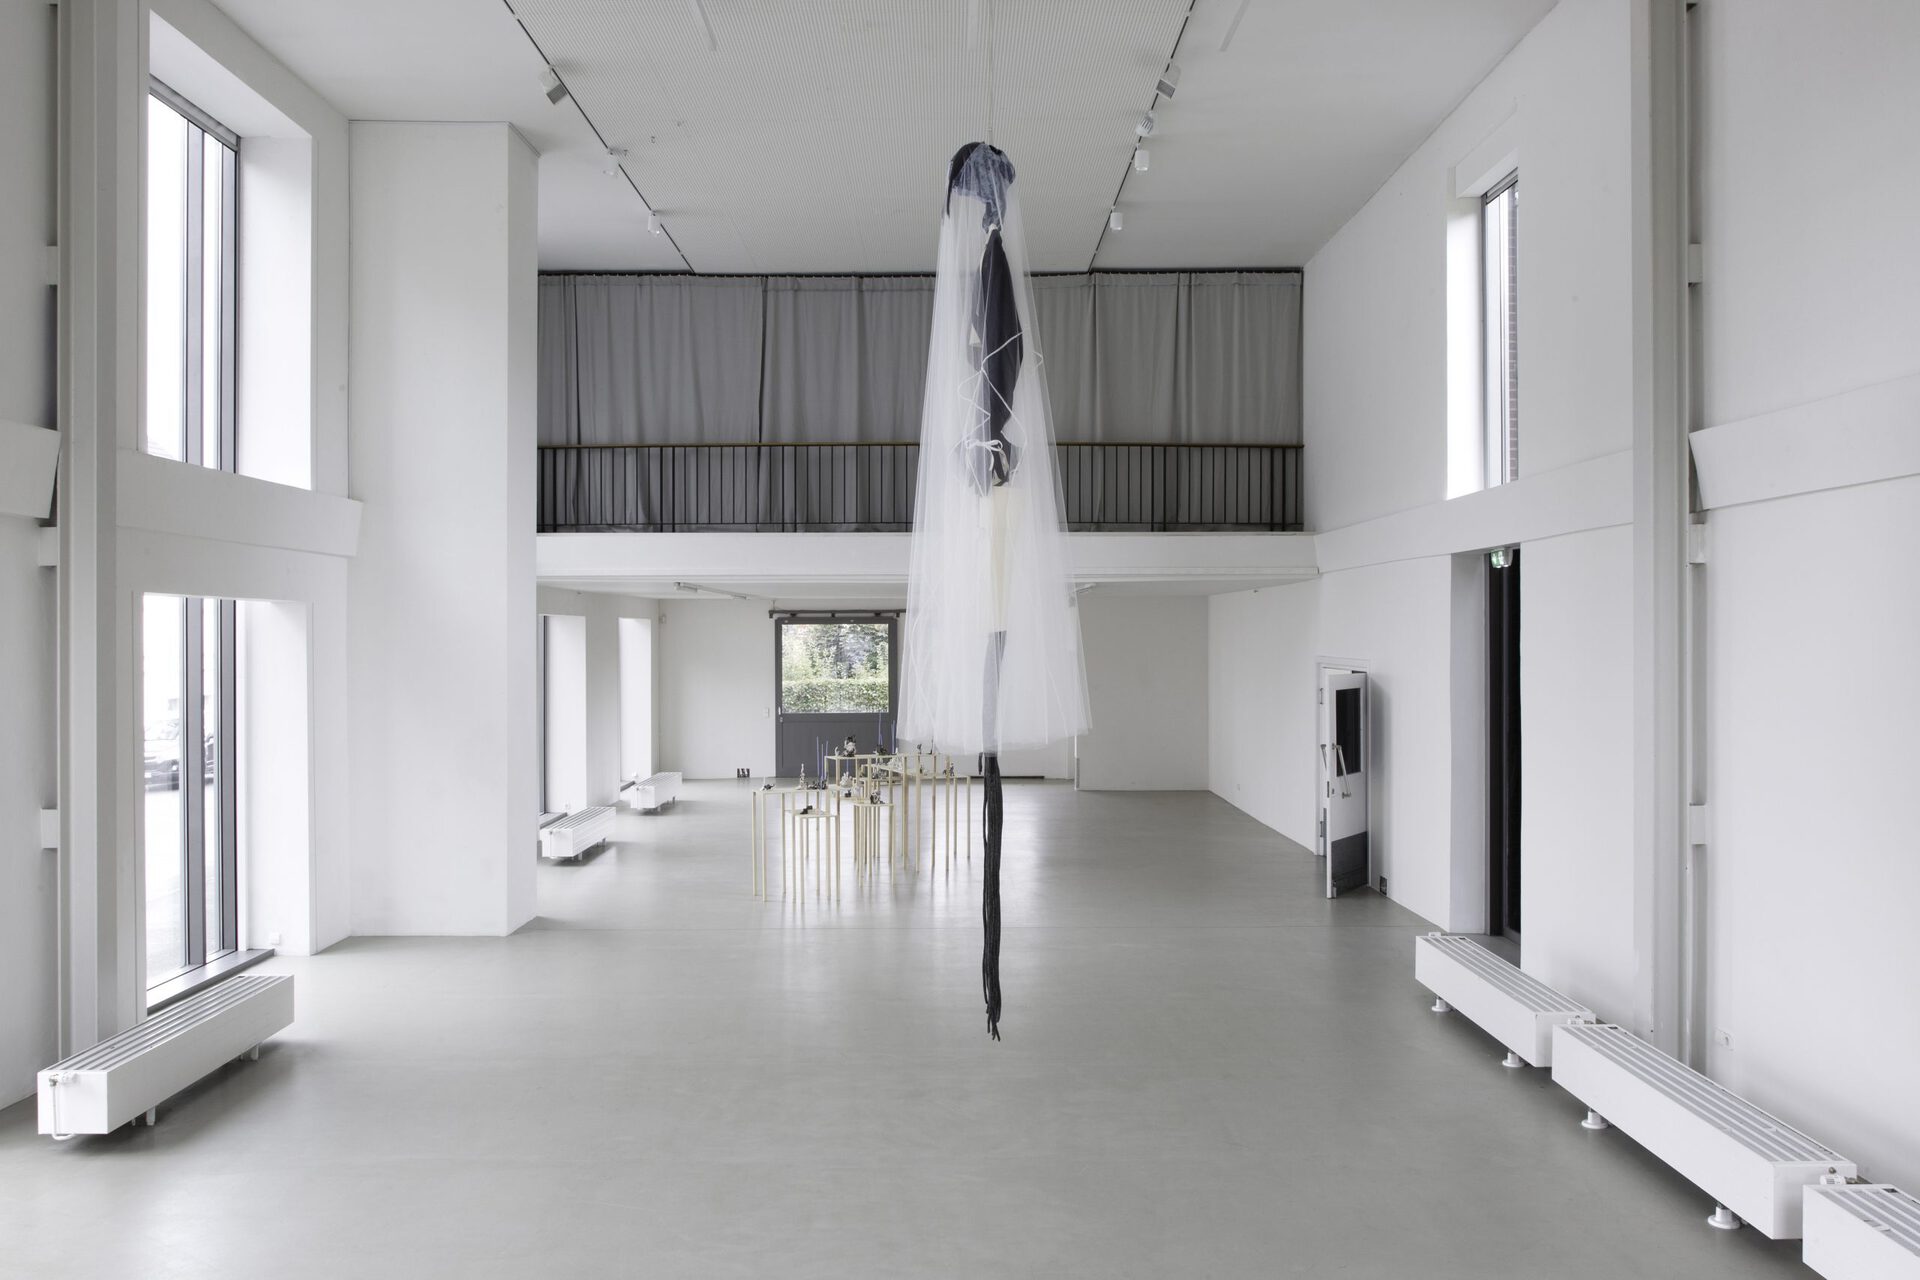 GOSSIP, 2021, installation view, M.1 Arthur Boskamp-Stiftung. Photo: Jens Franke.